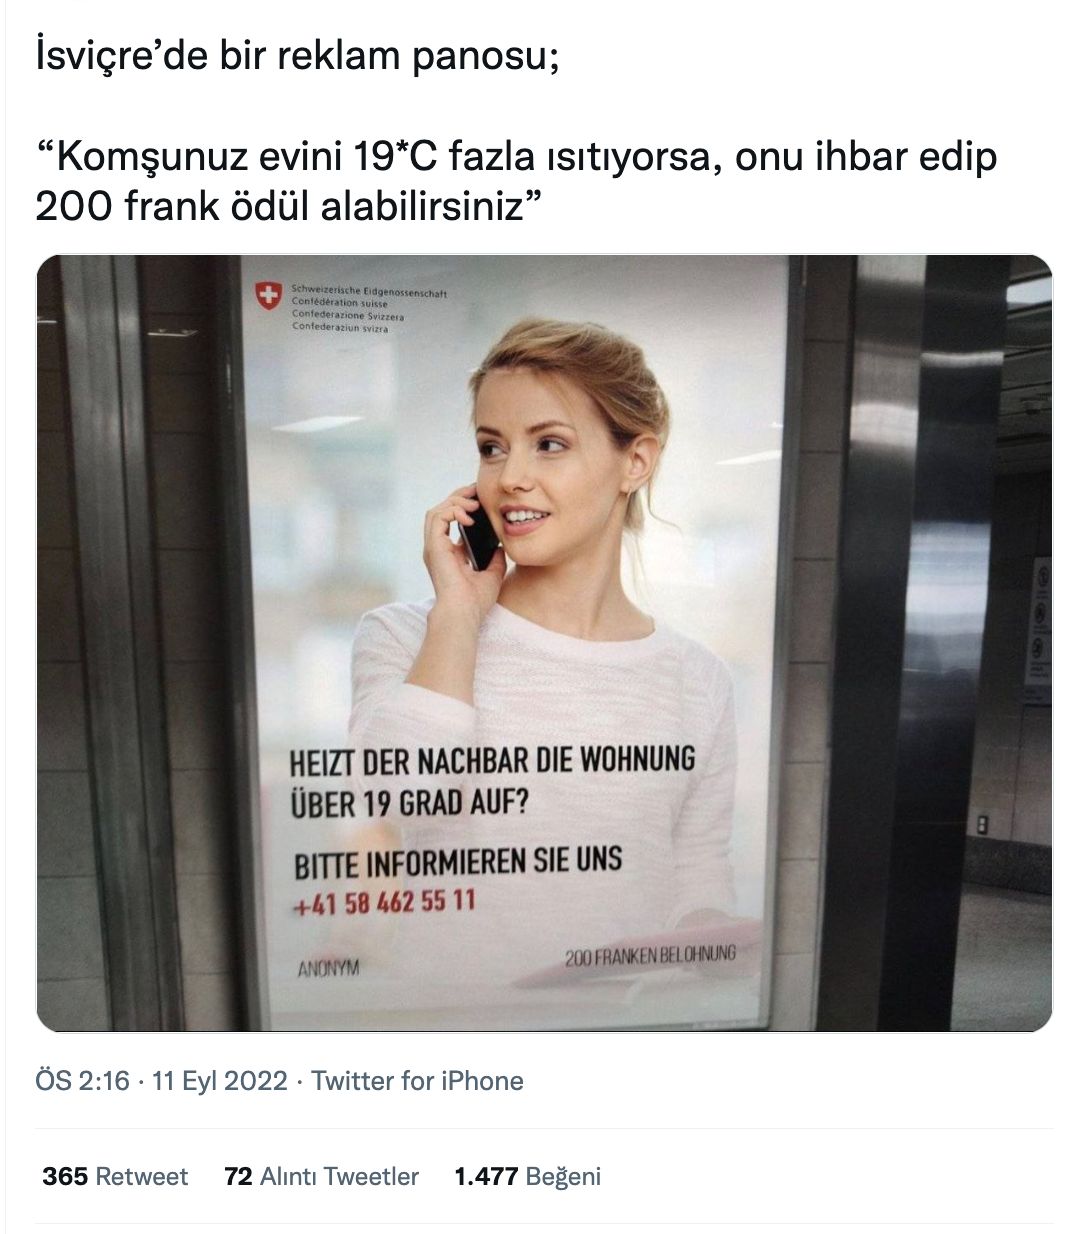 isvicre odul reklam afisi iddiasi